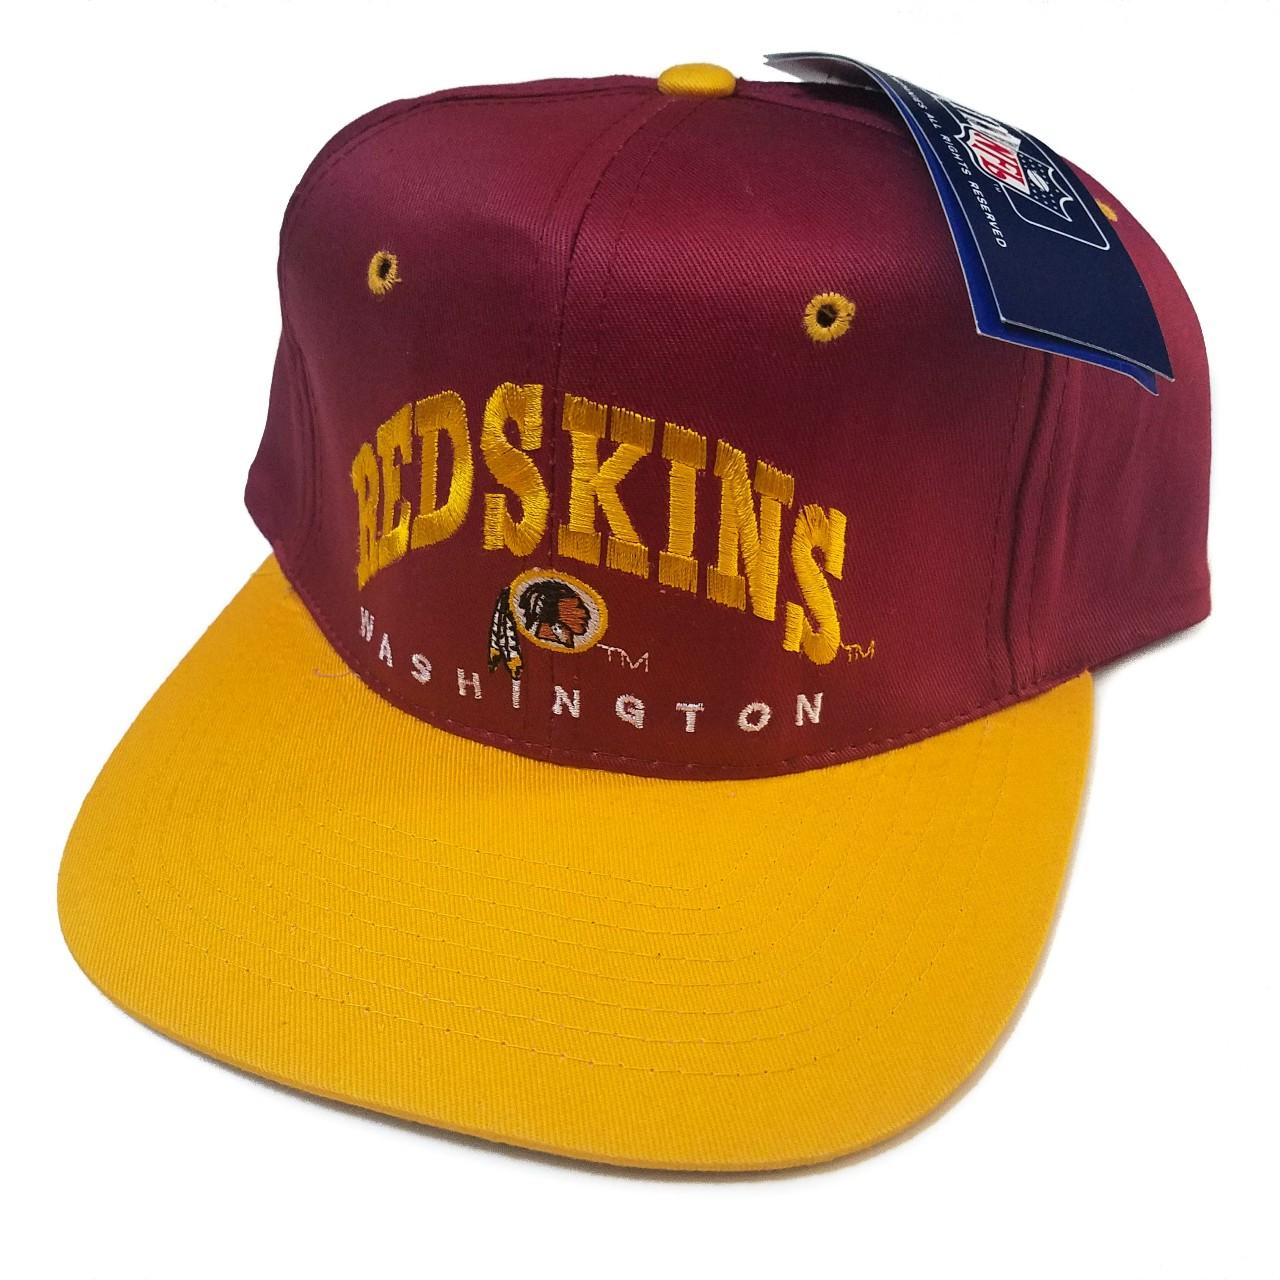 Vintage Washington Redskins hat by Drew Pearson. - Depop